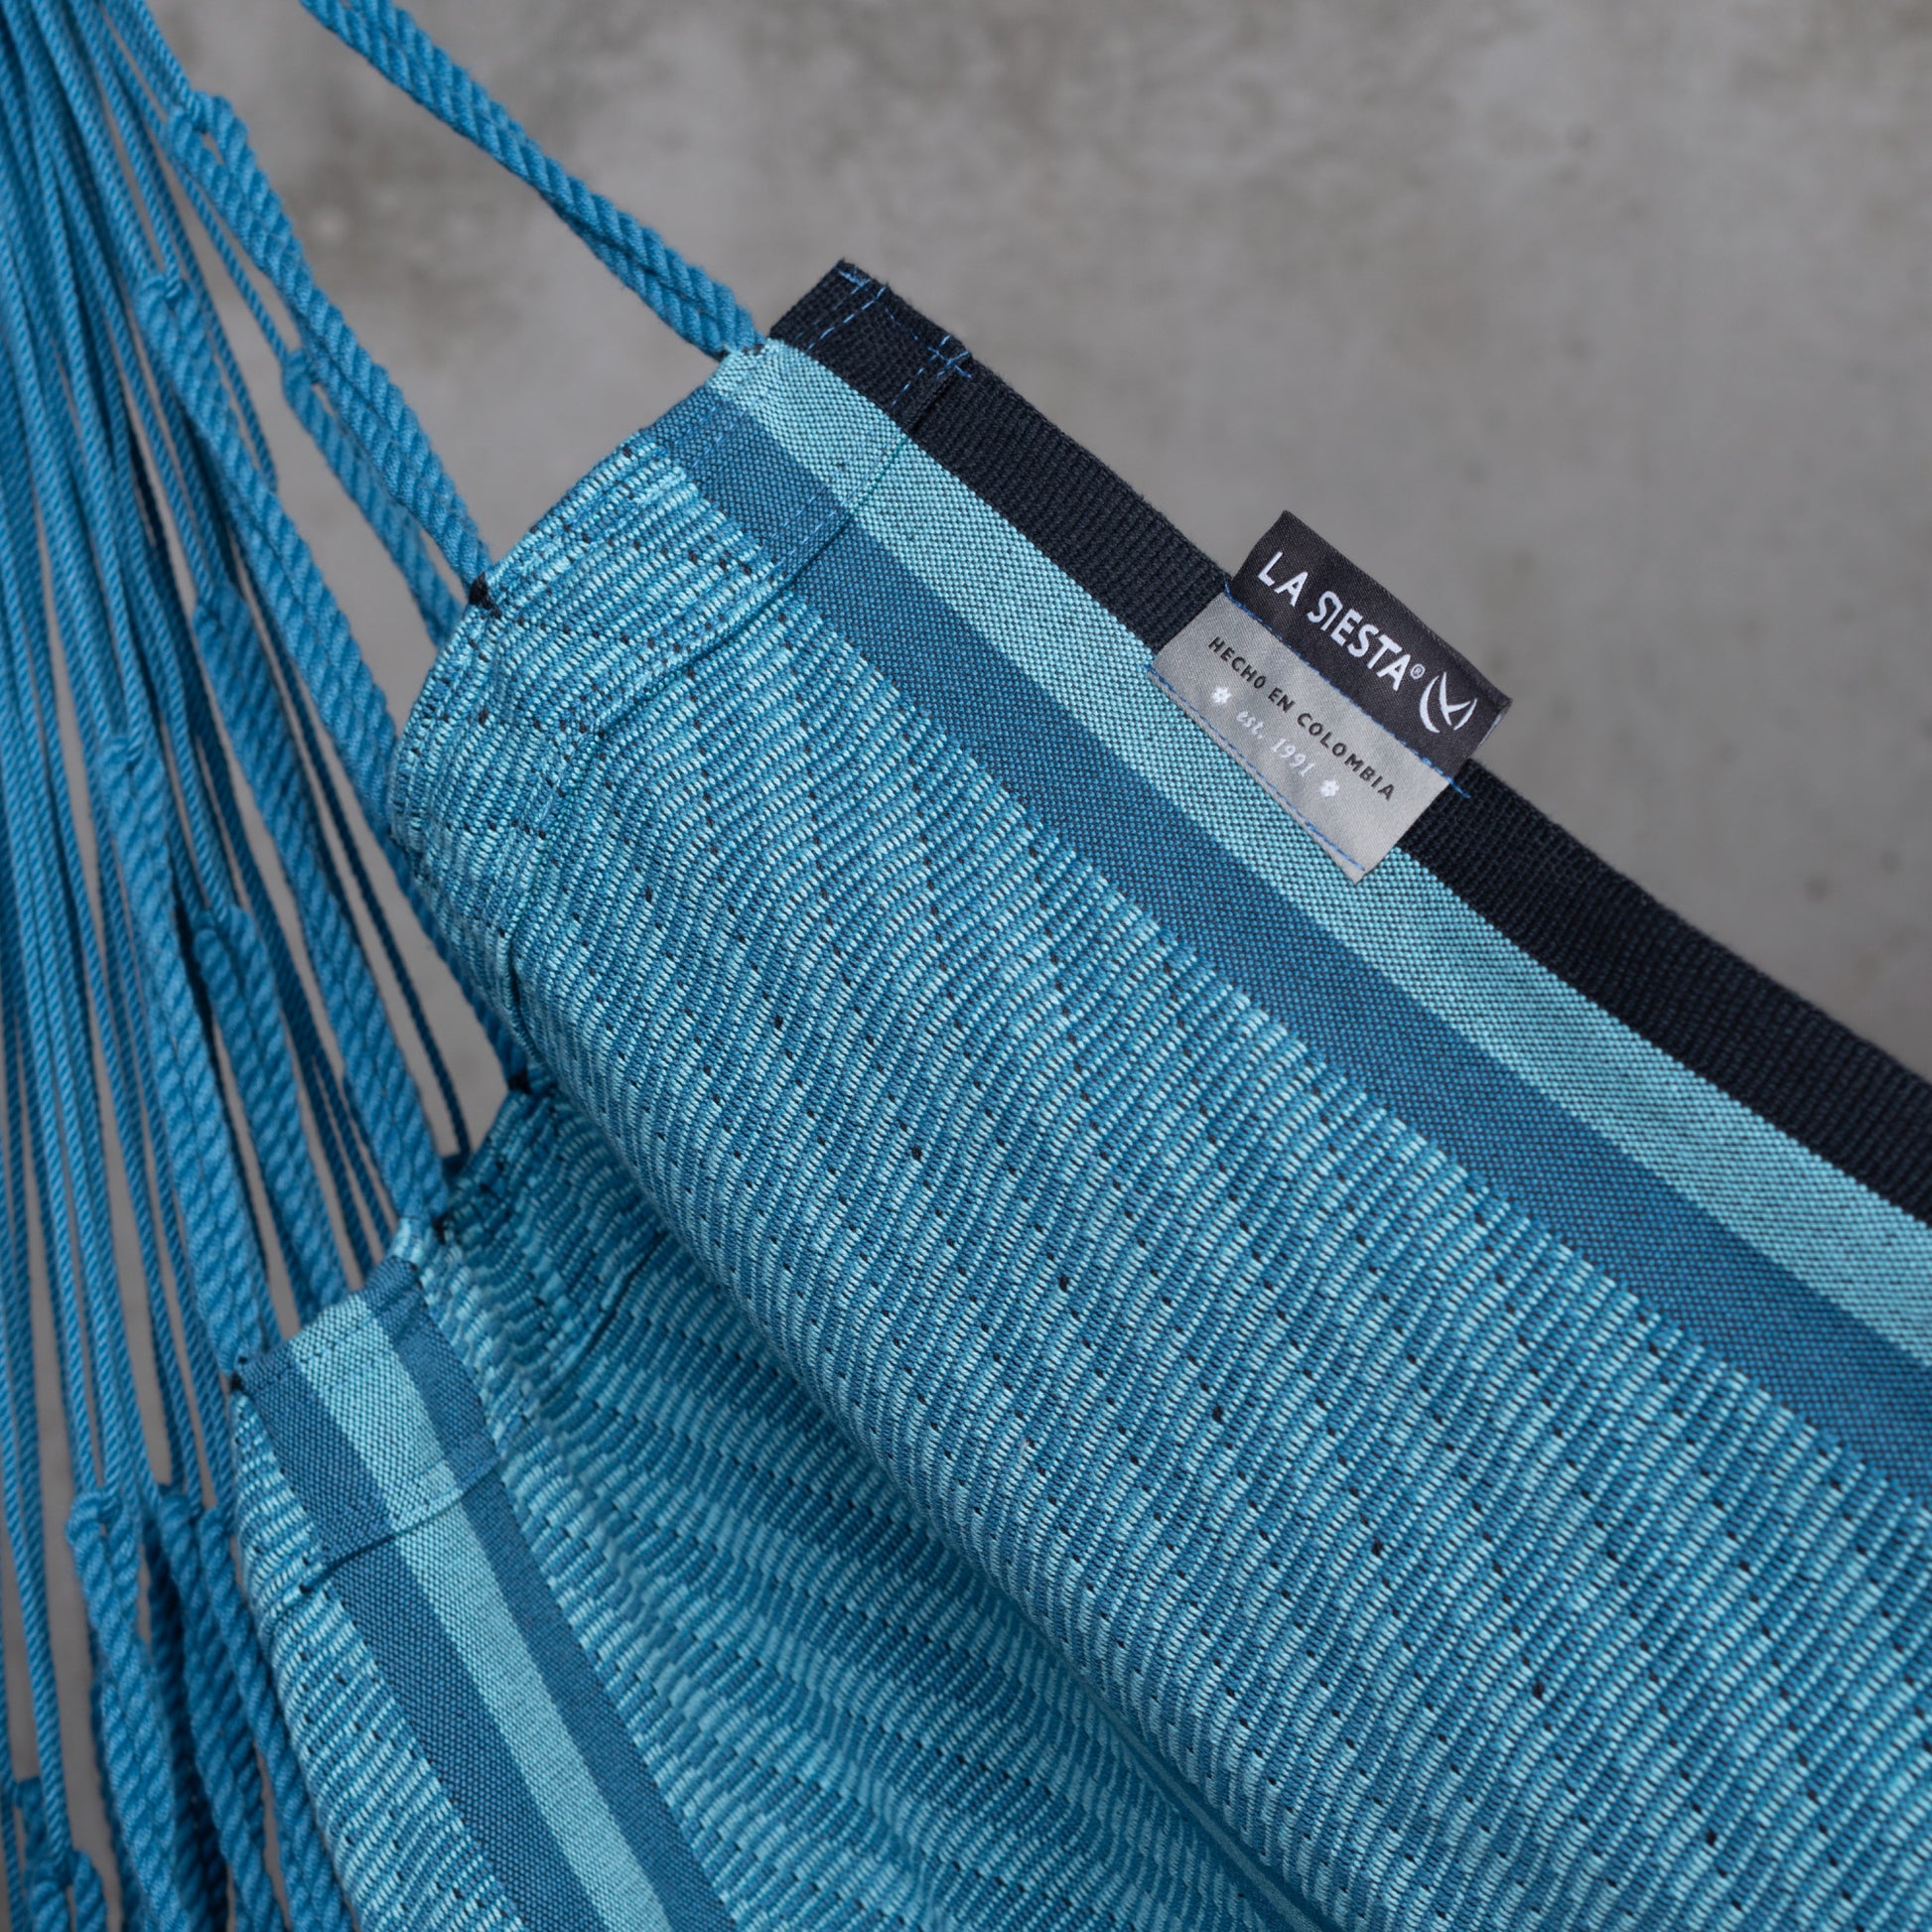 Cumbia Organic Blue Zebra - Organic Cotton Hammock Chair Bed for Udine Stand